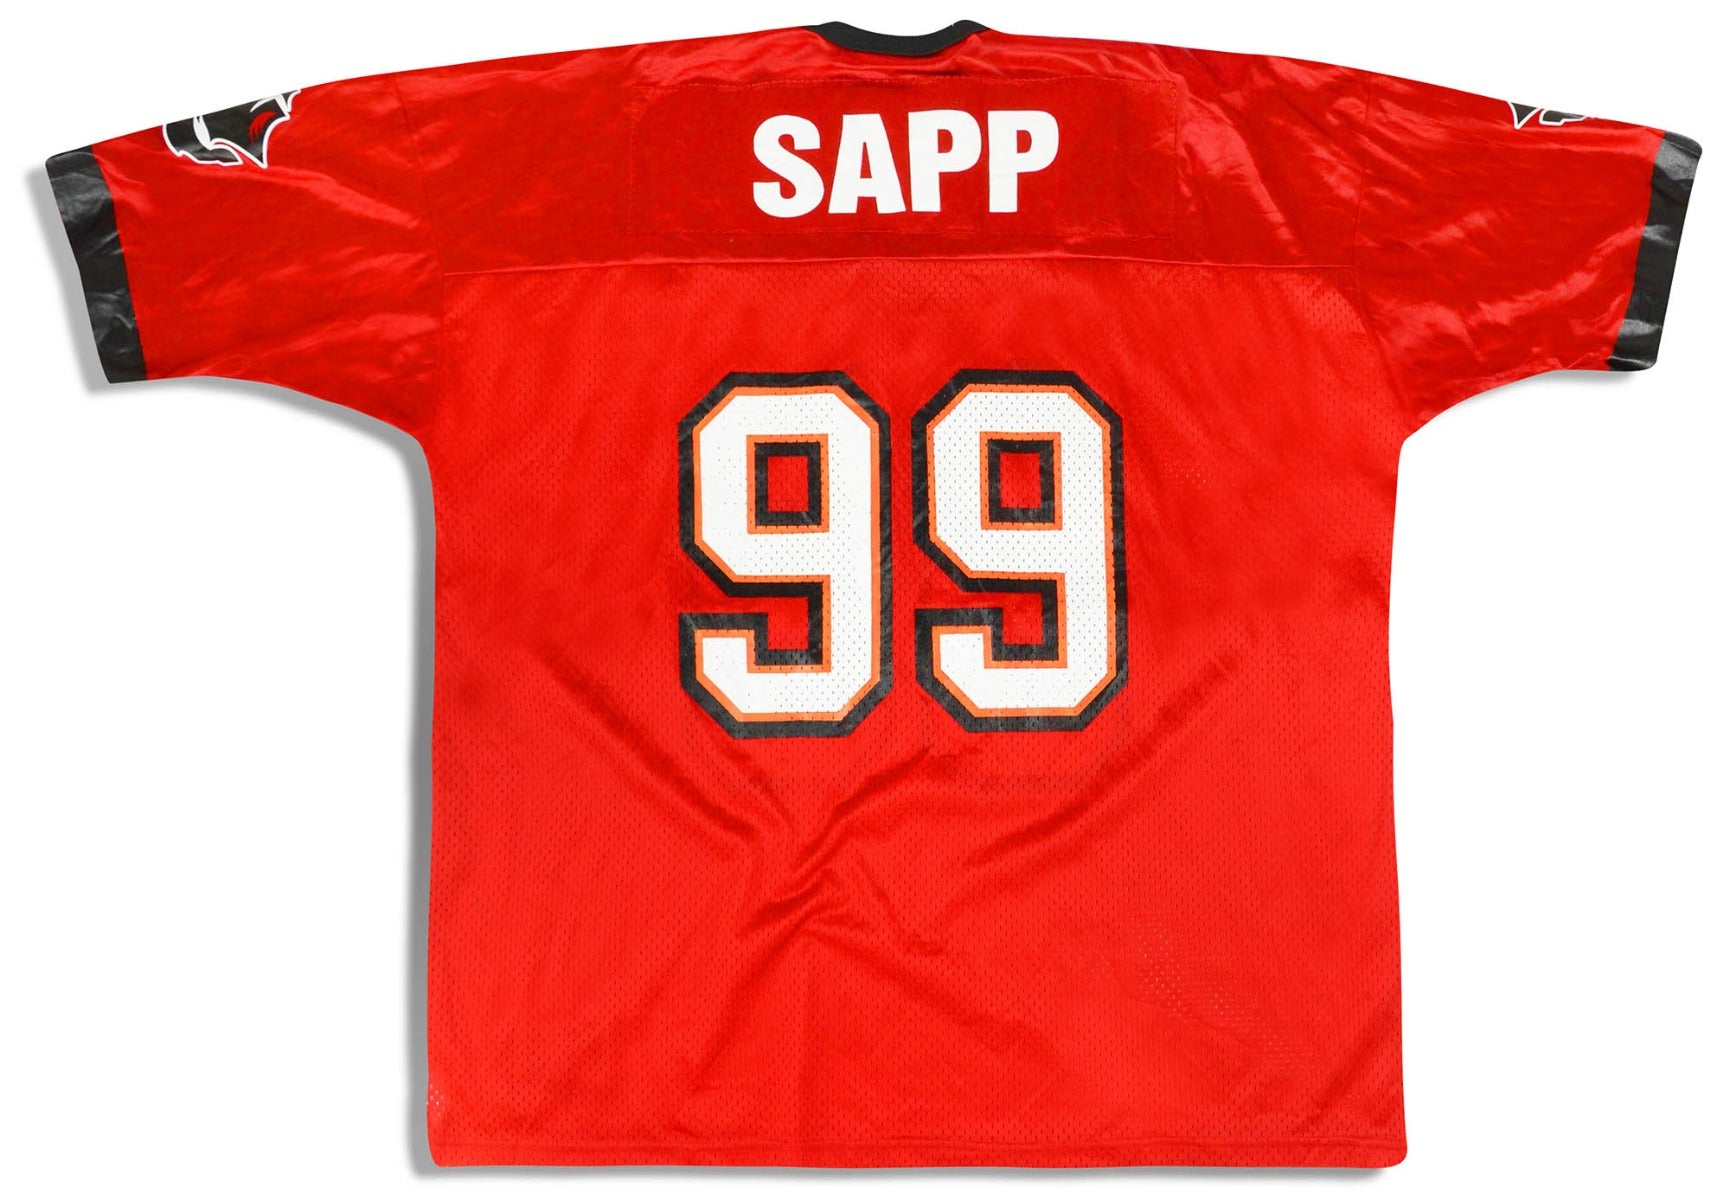 1997-00 TAMPA BAY BUCCANEERS SAPP #99 CHAMPION JERSEY (HOME) XXL